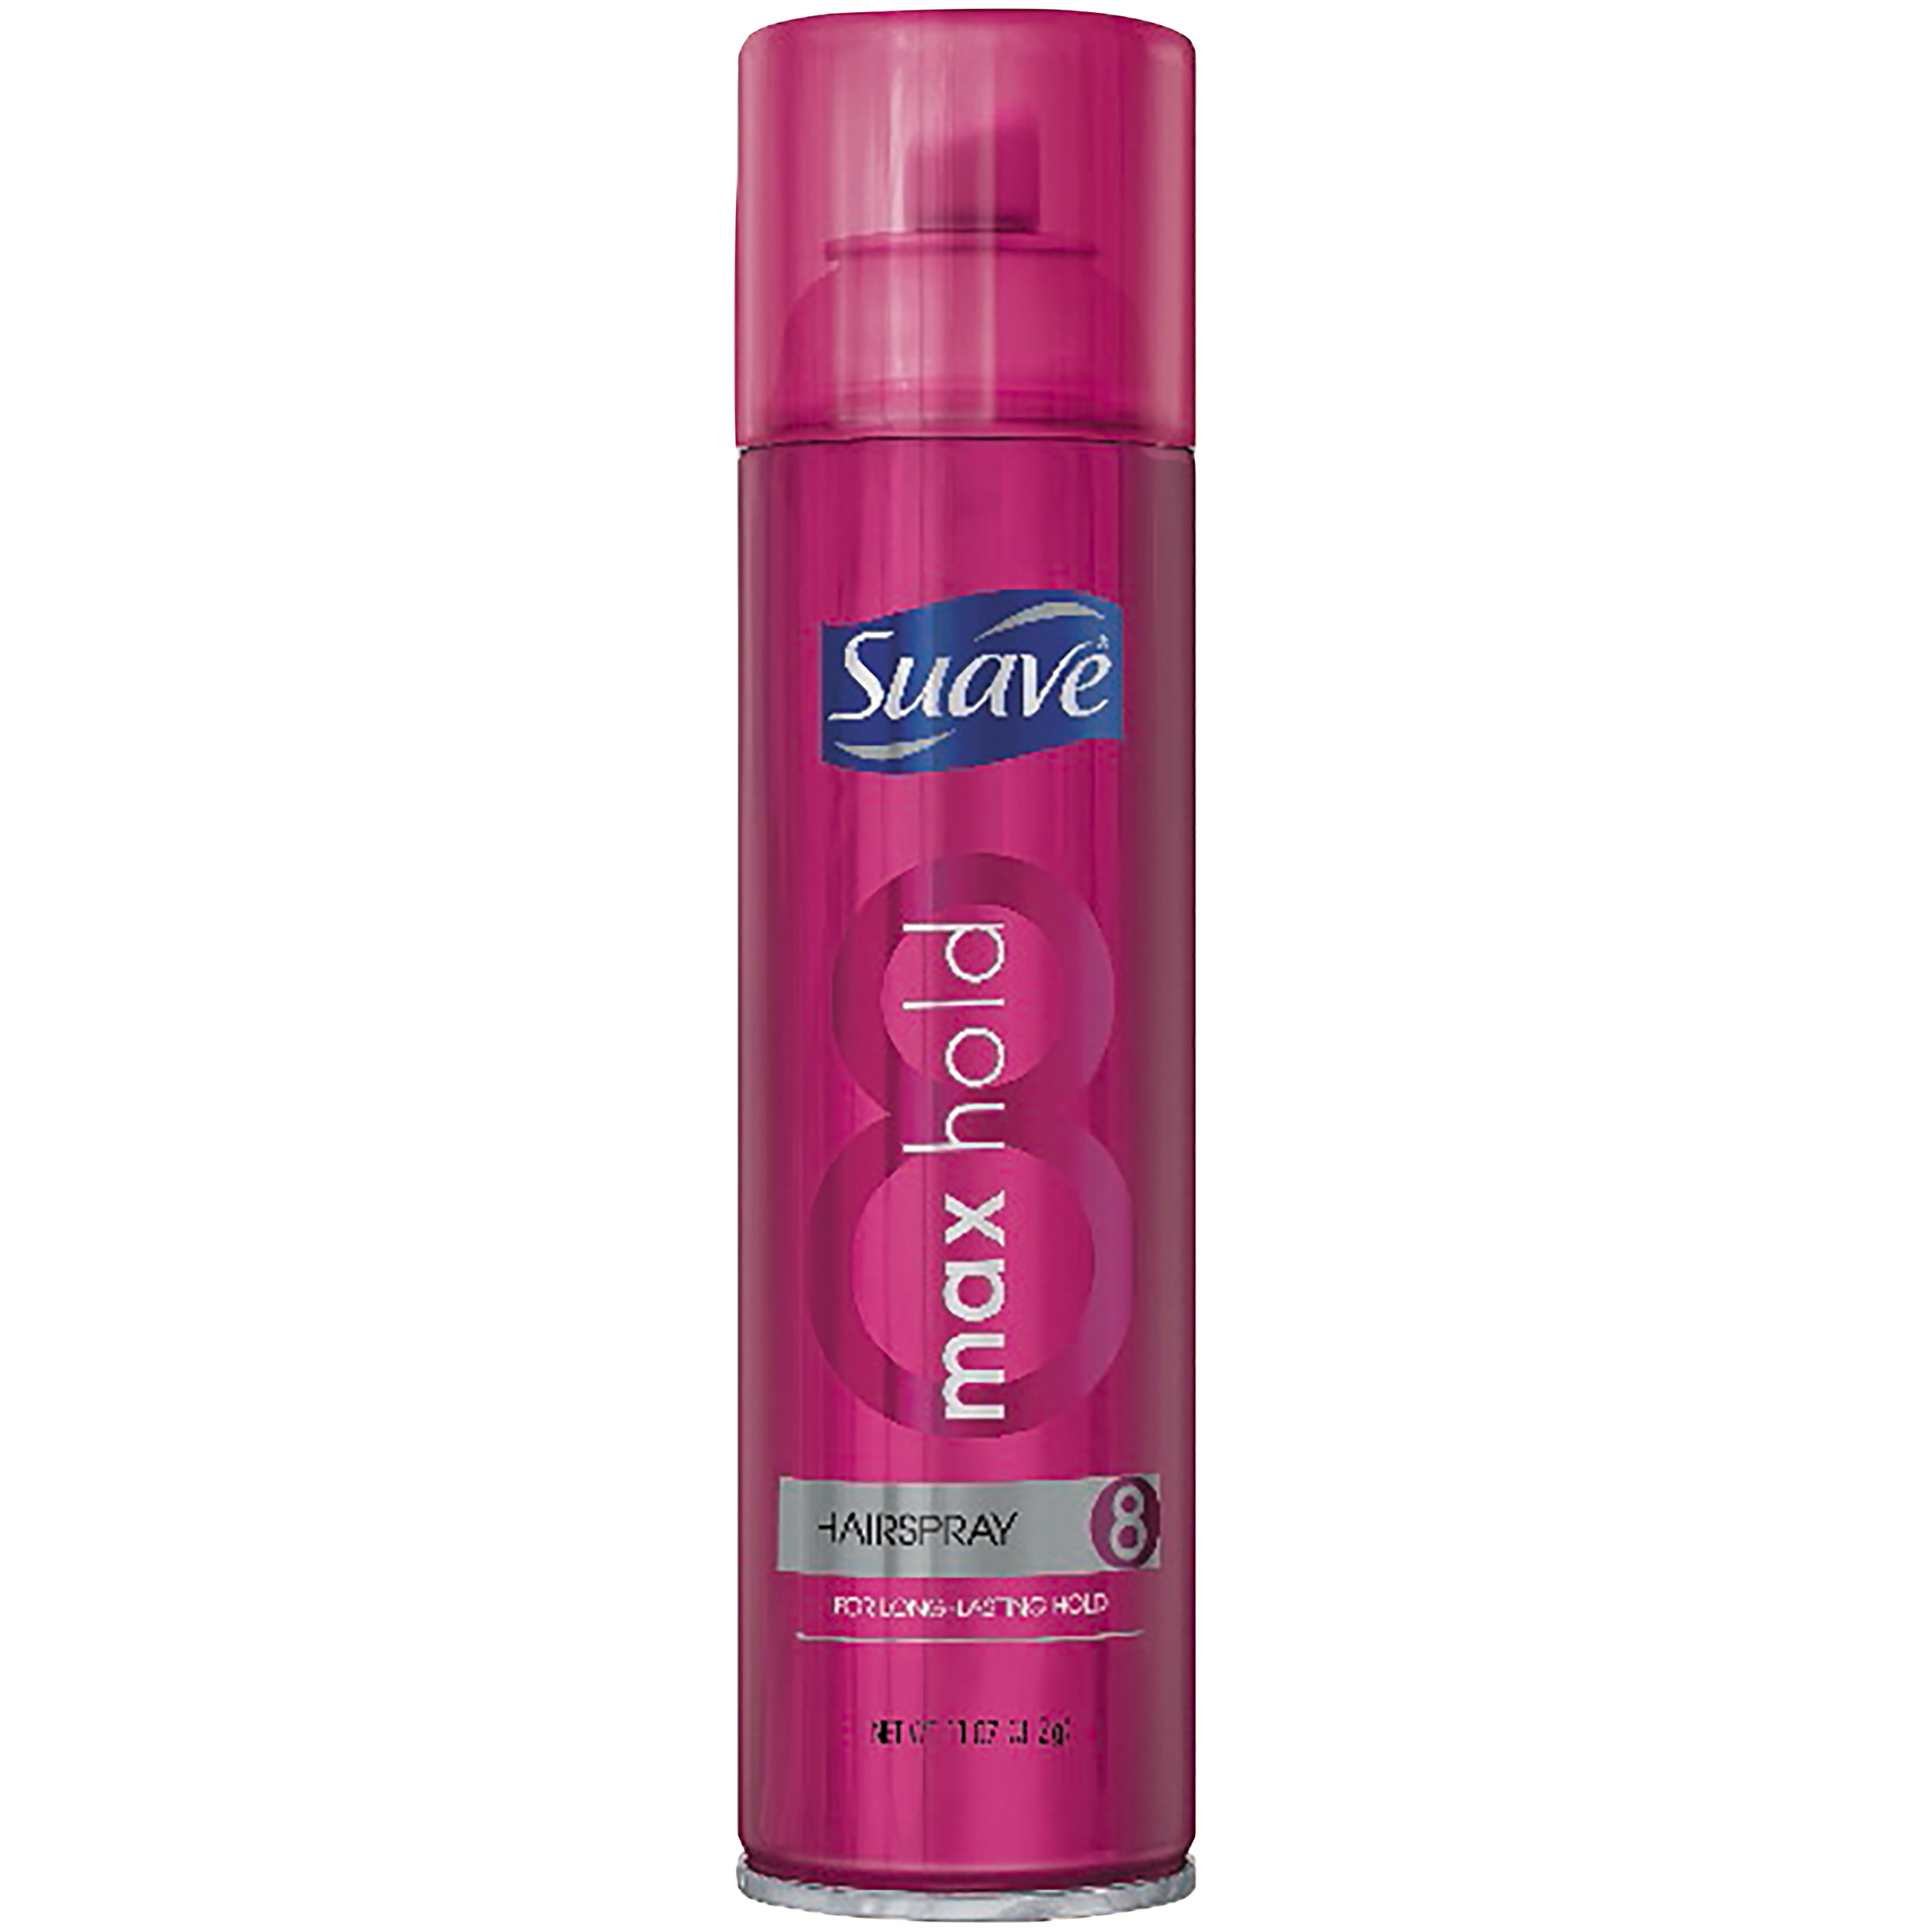 Suave Hairspray, Max Hold 8, 11 oz (312 g)